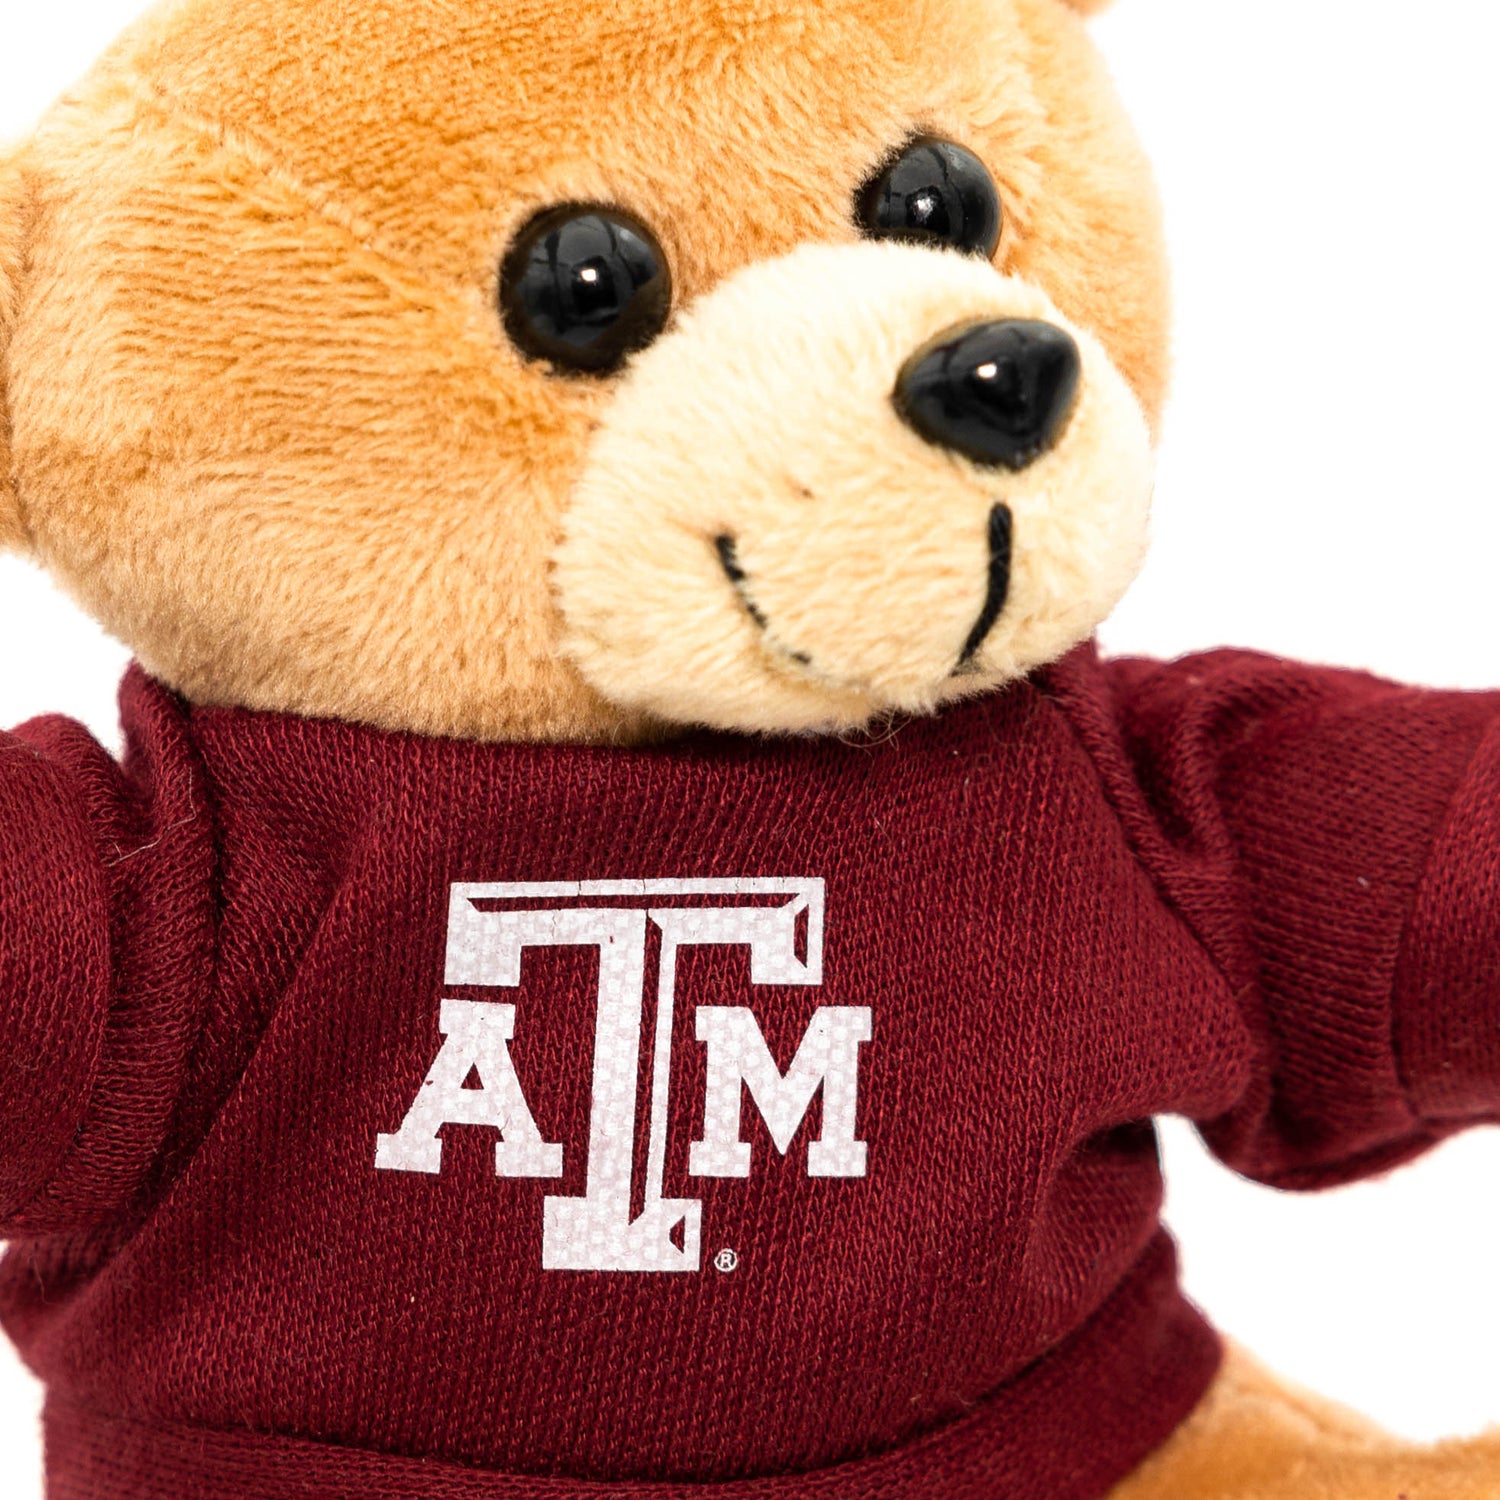 Texas A&M Beveled Atm Brown Teddy Bear Keychain